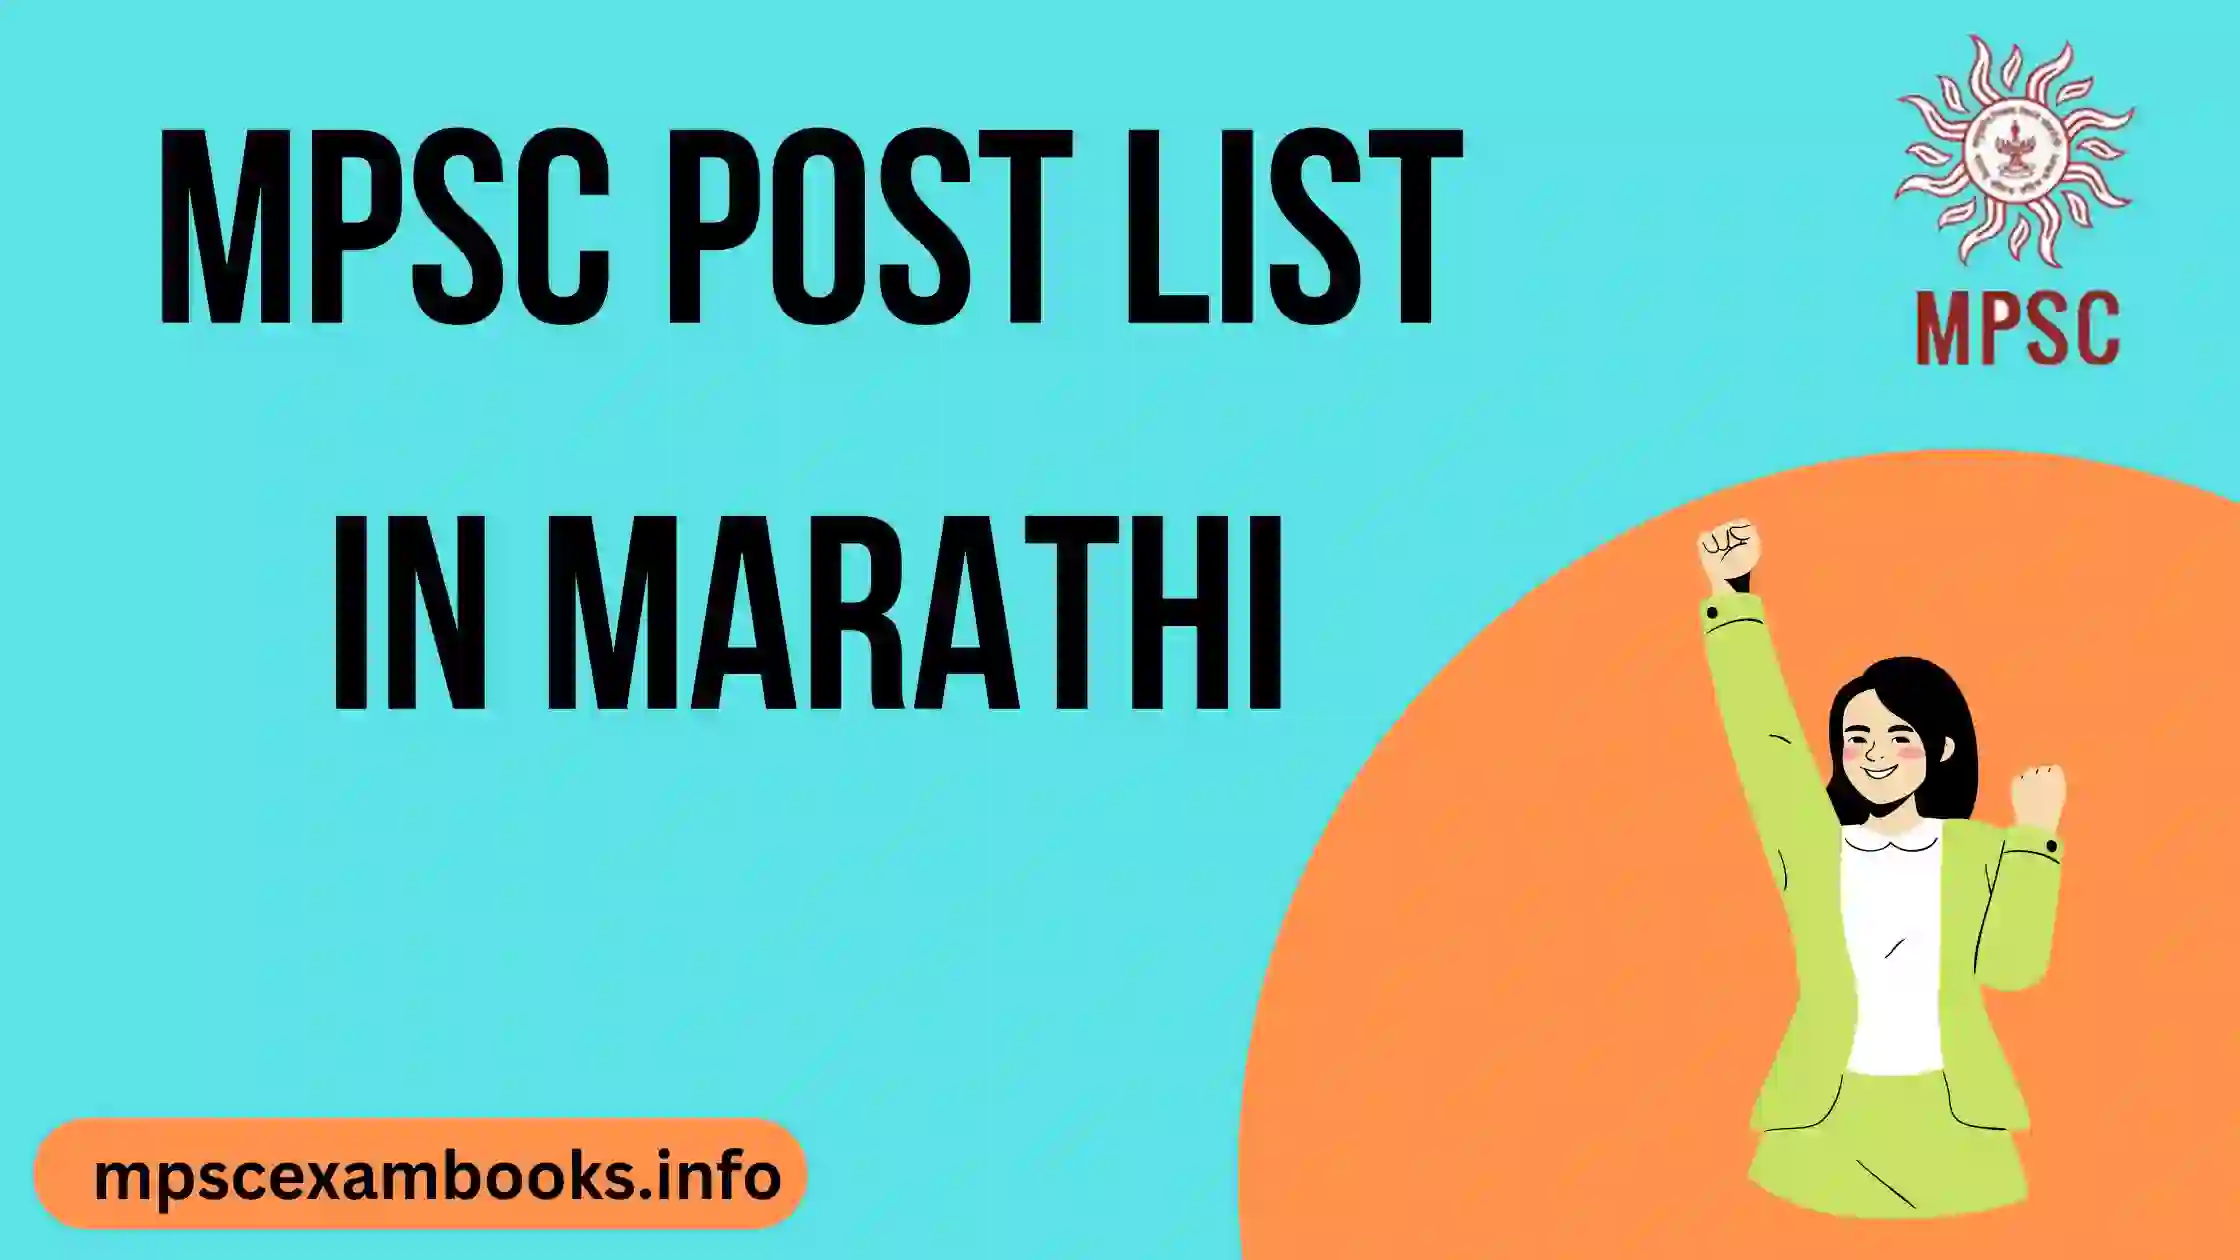 MPSC post list| MPSC Post list in Marathi